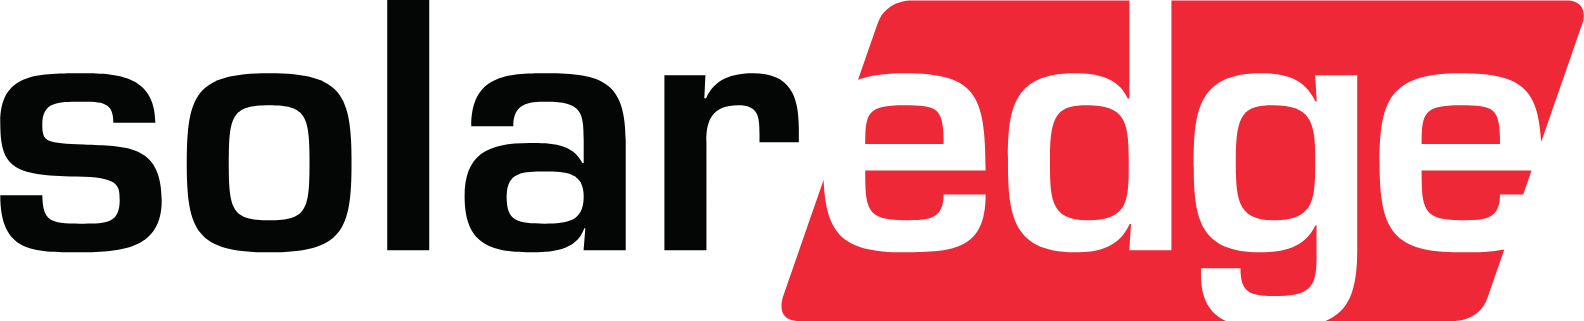 SolarEdge logo (transparent PNG)